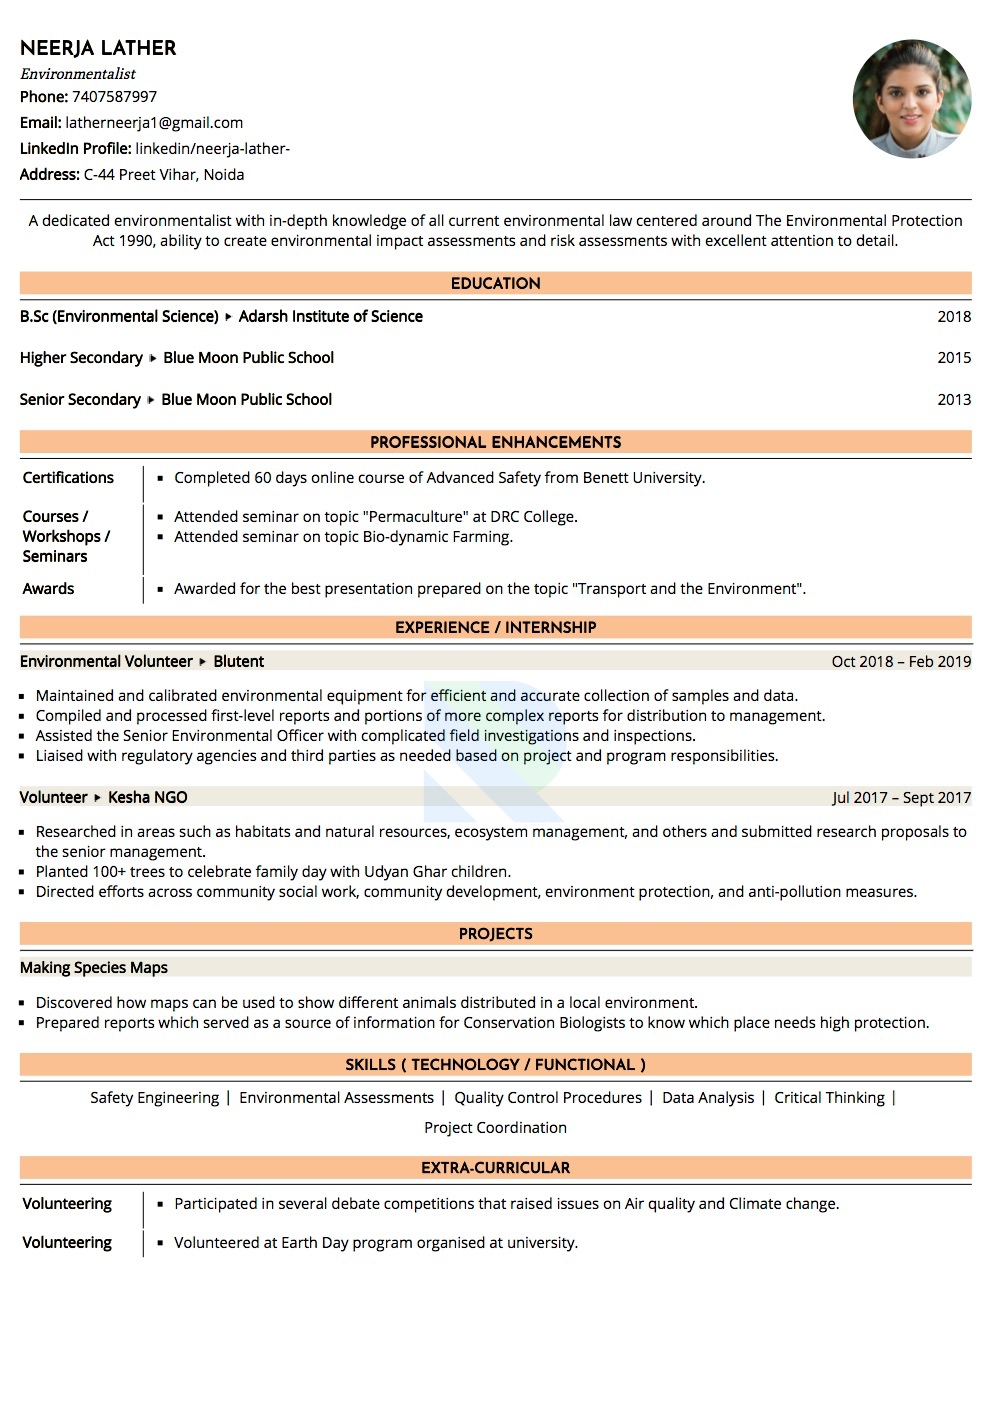 Sample Resume of Enviornmentalist  | Free Resume Templates & Samples on Resumod.co